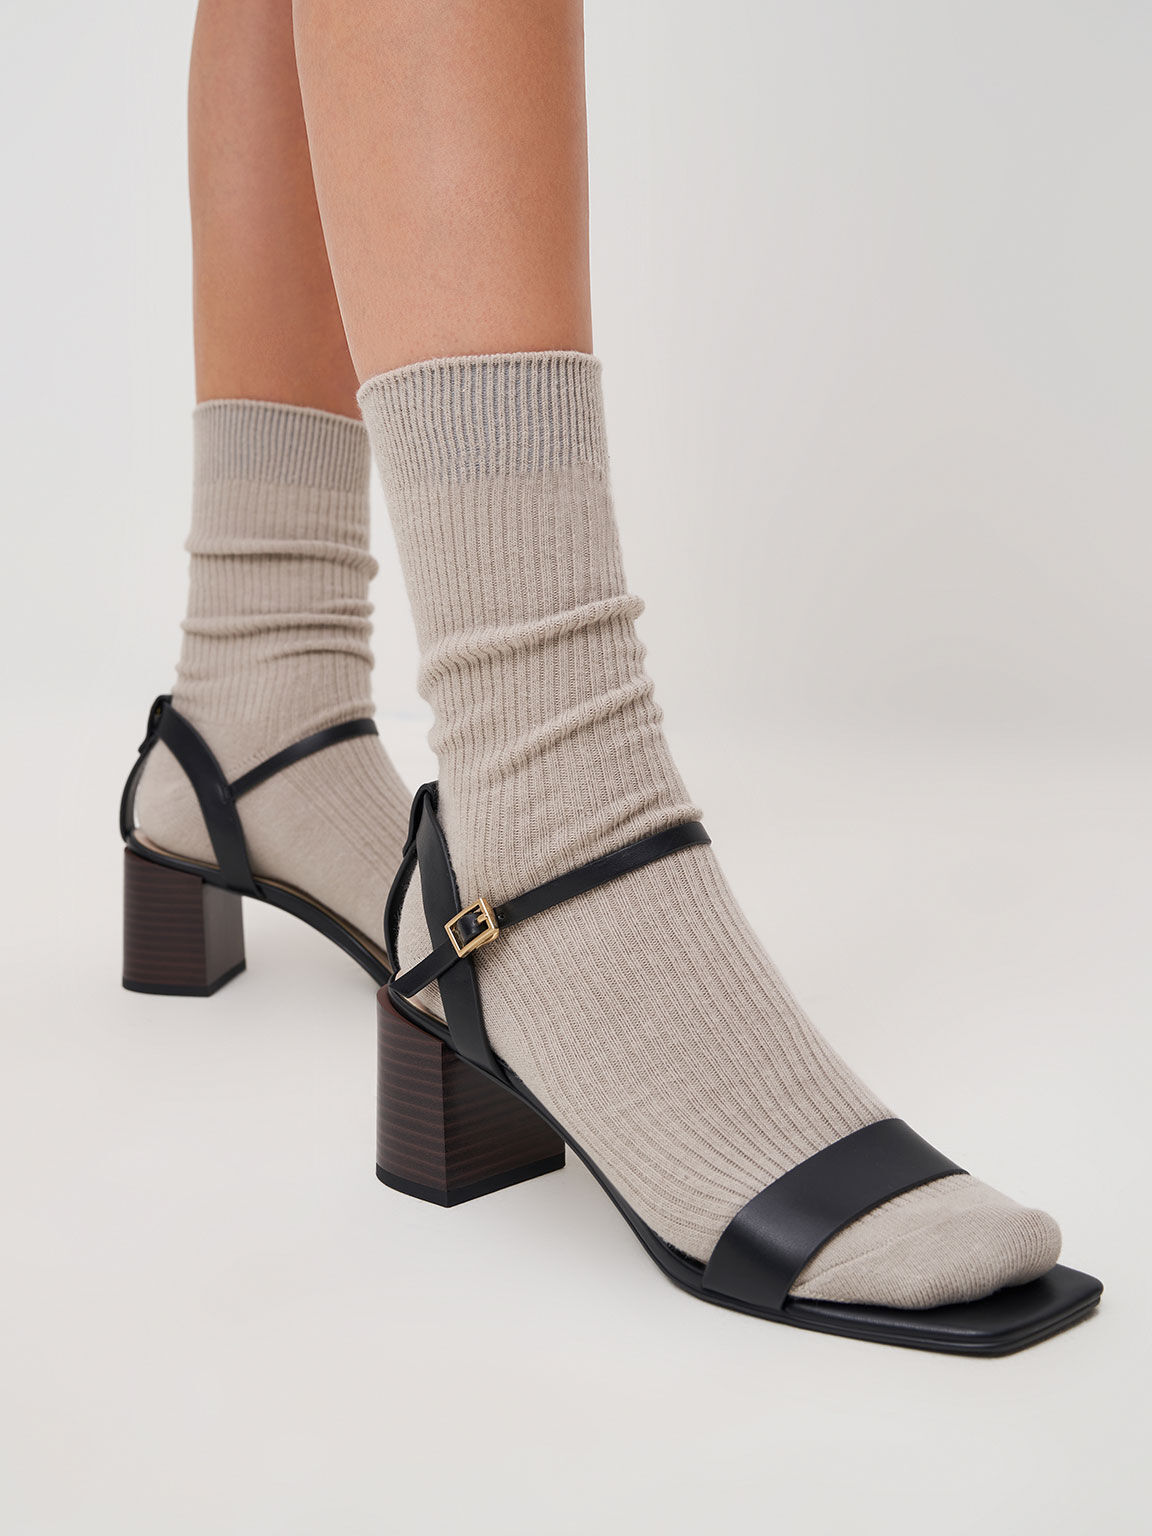 HSMQHJWE Strappy High Heels 4 Inch Wedge Sandals Women's Ankle Strap High  Heels Open Toe Pump Heeled Sandals Shoes Black,8) - Walmart.com